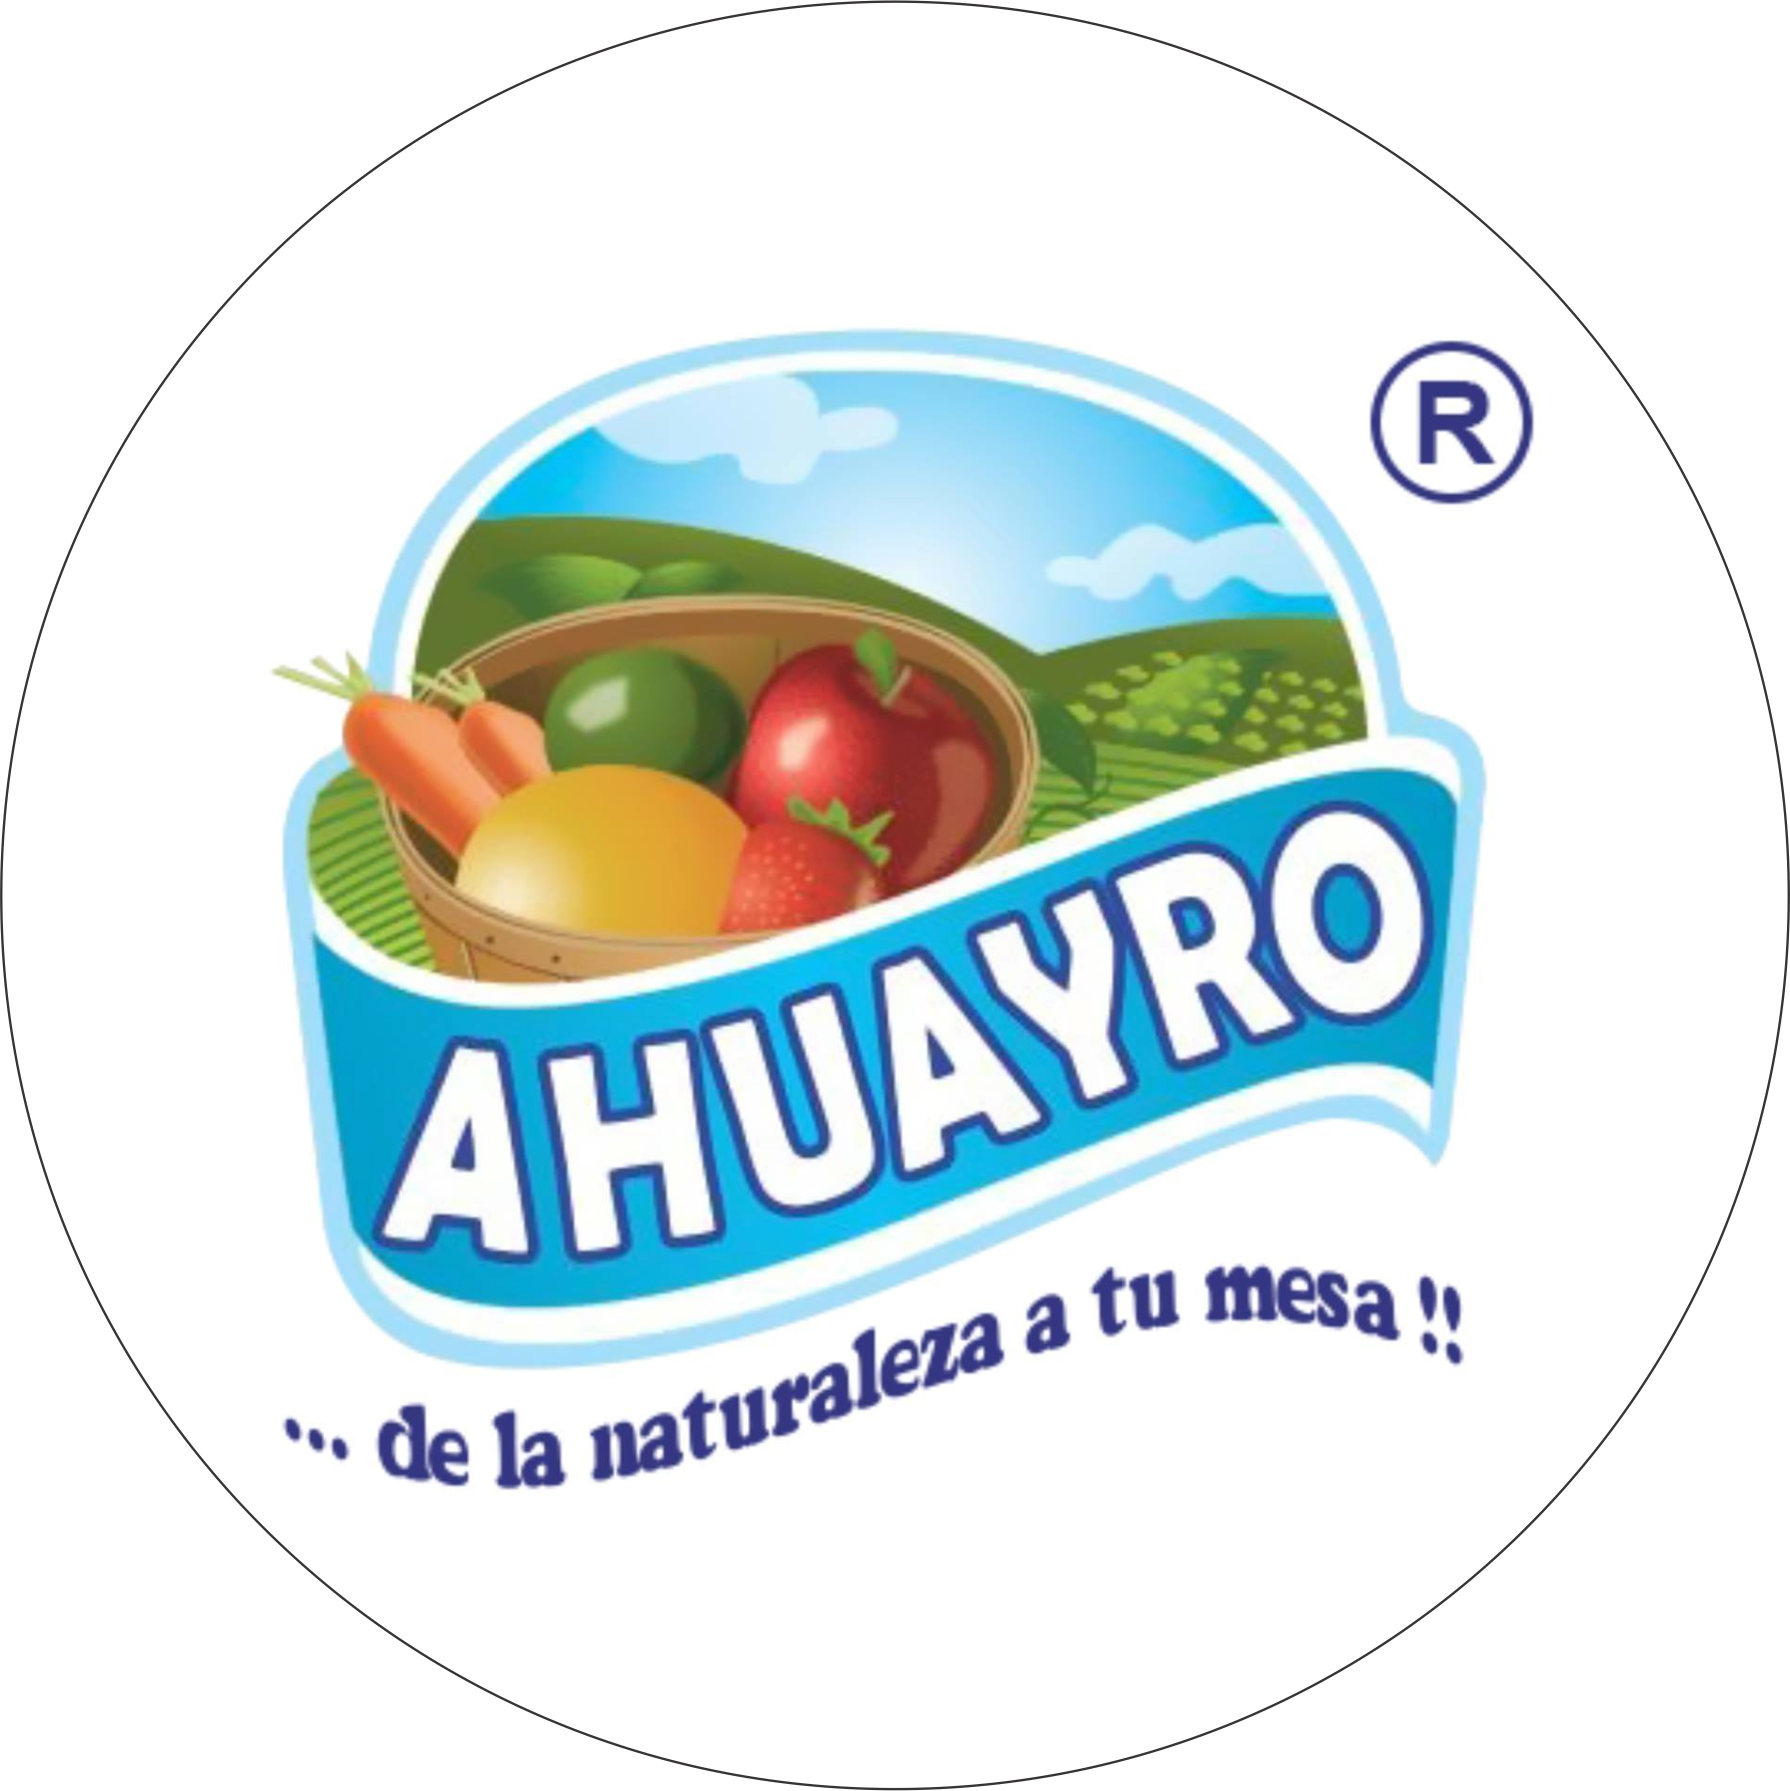 ahuayro